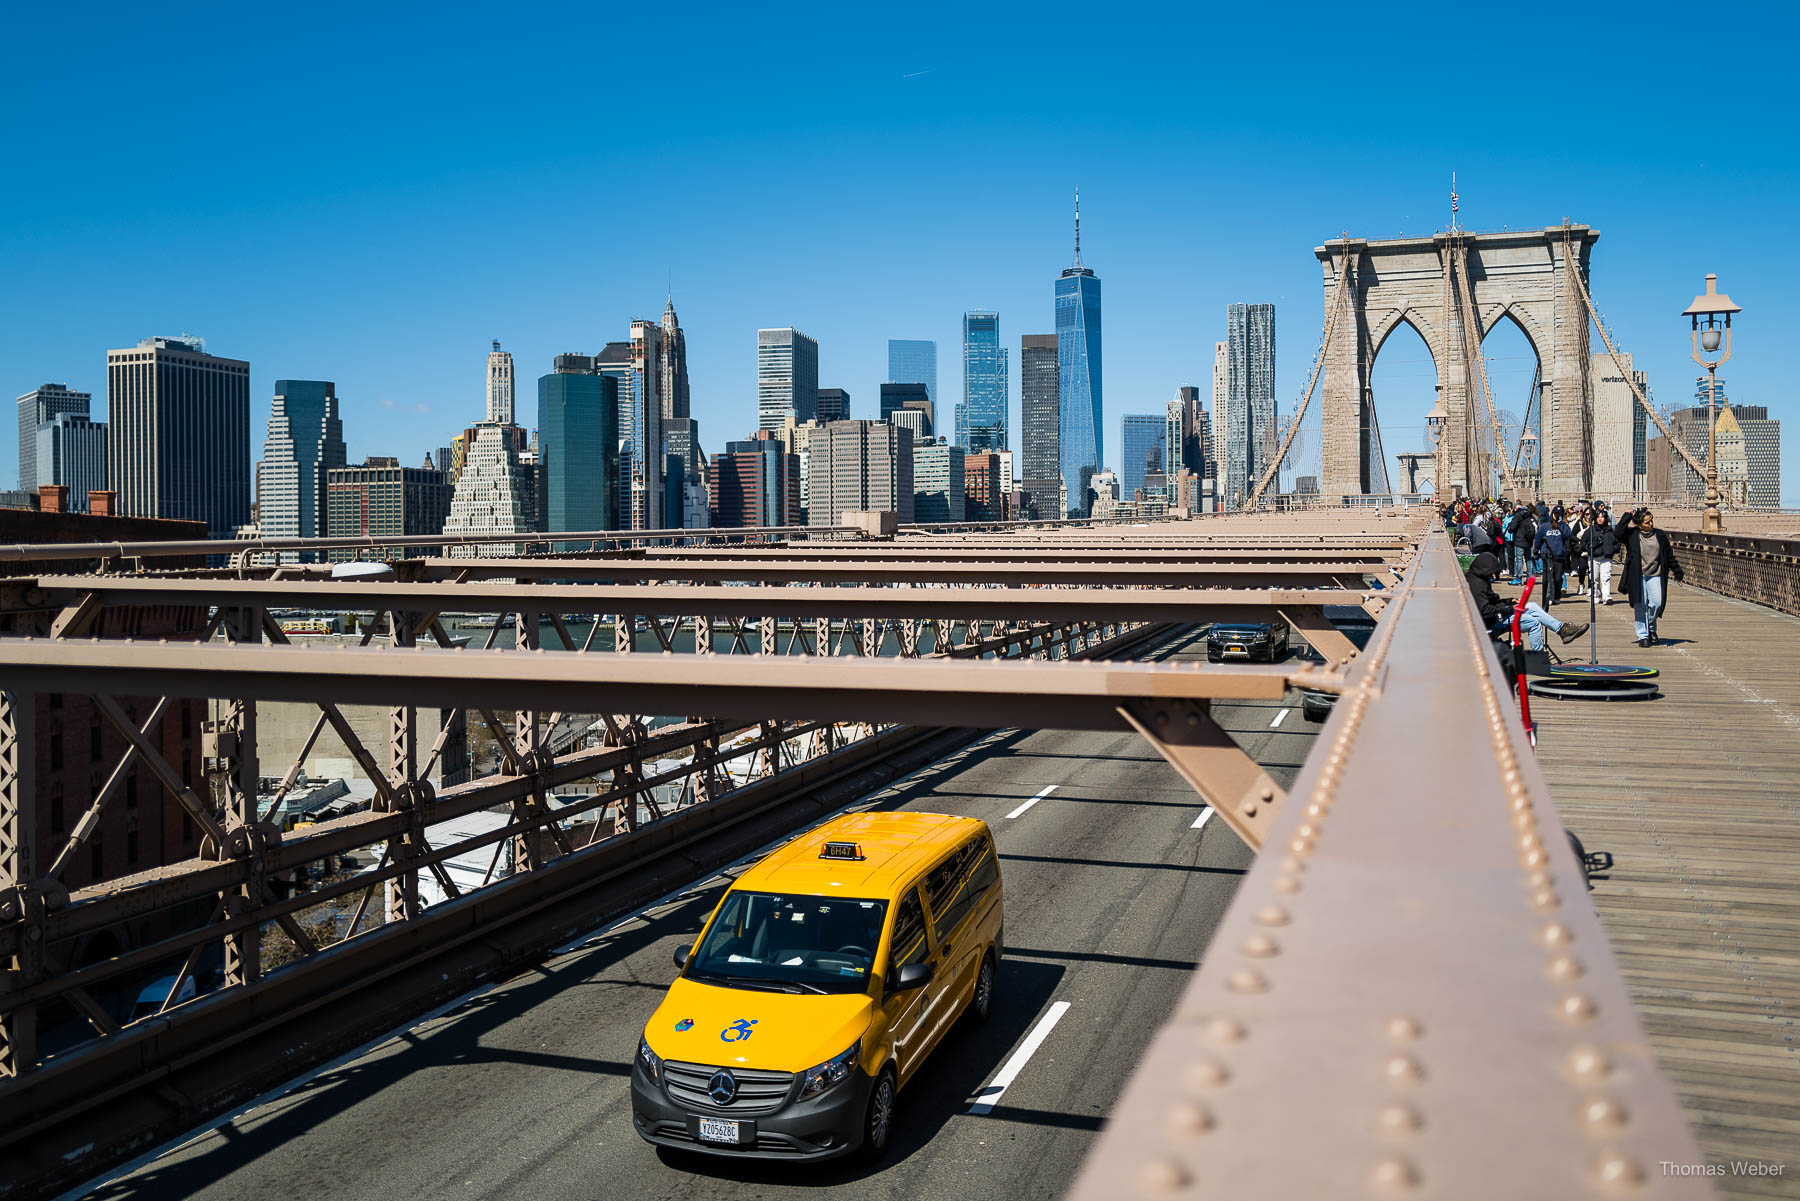 Brooklyn Bridge in New York City USA, Fotograf Thomas Weber aus Oldenburg